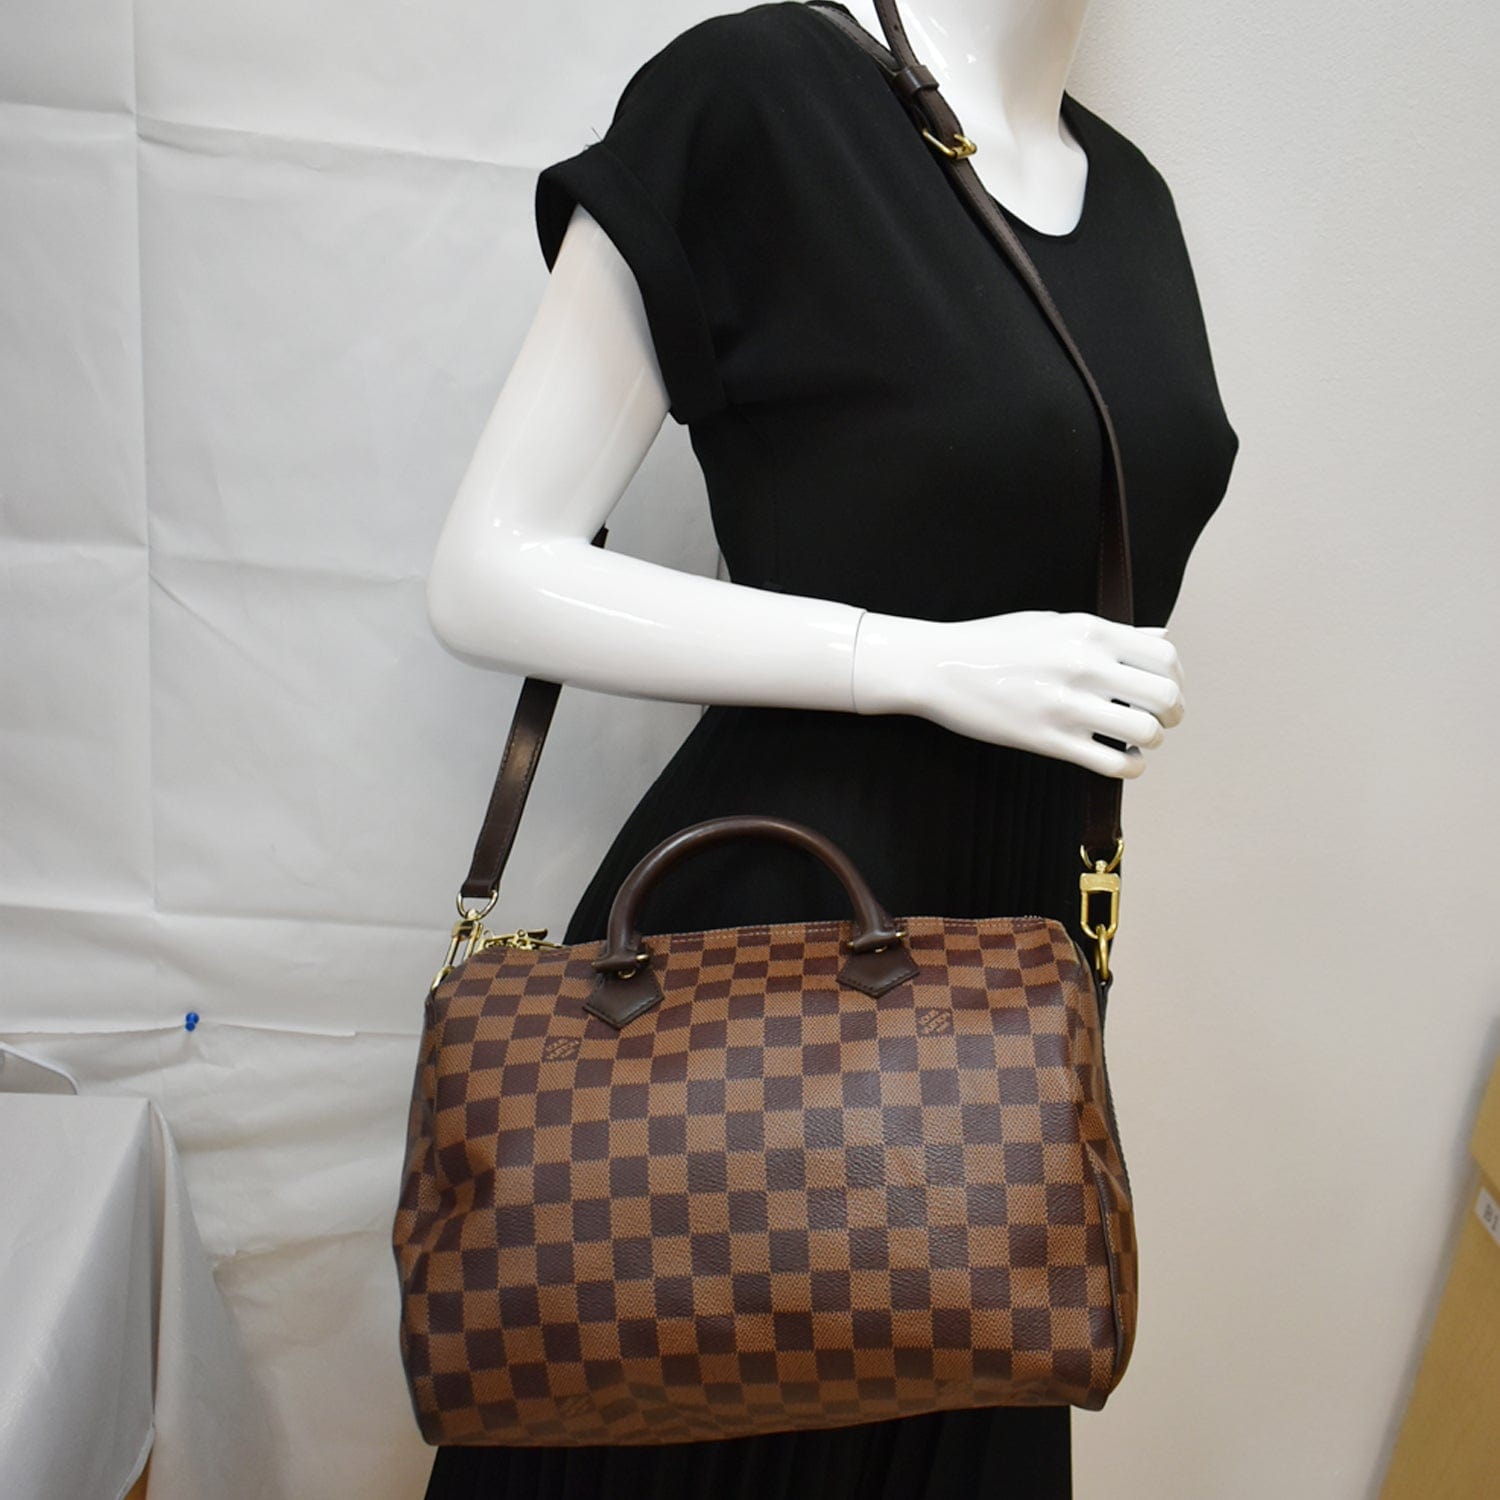 Louis Vuitton Damier Speedy Bandouliere Bag